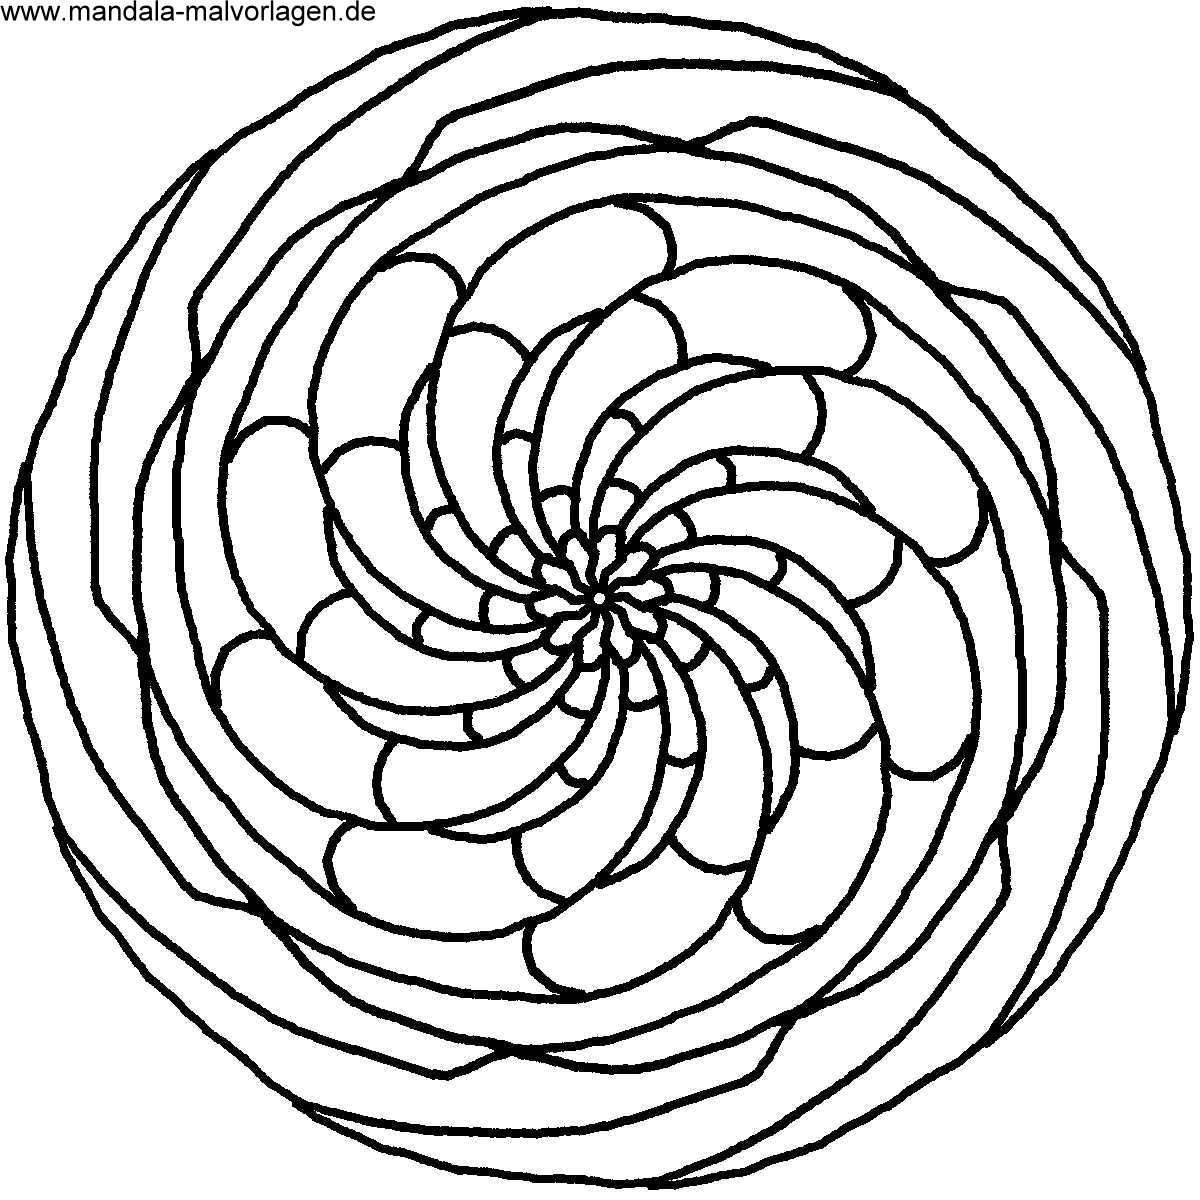 Coloring harmonic spiral